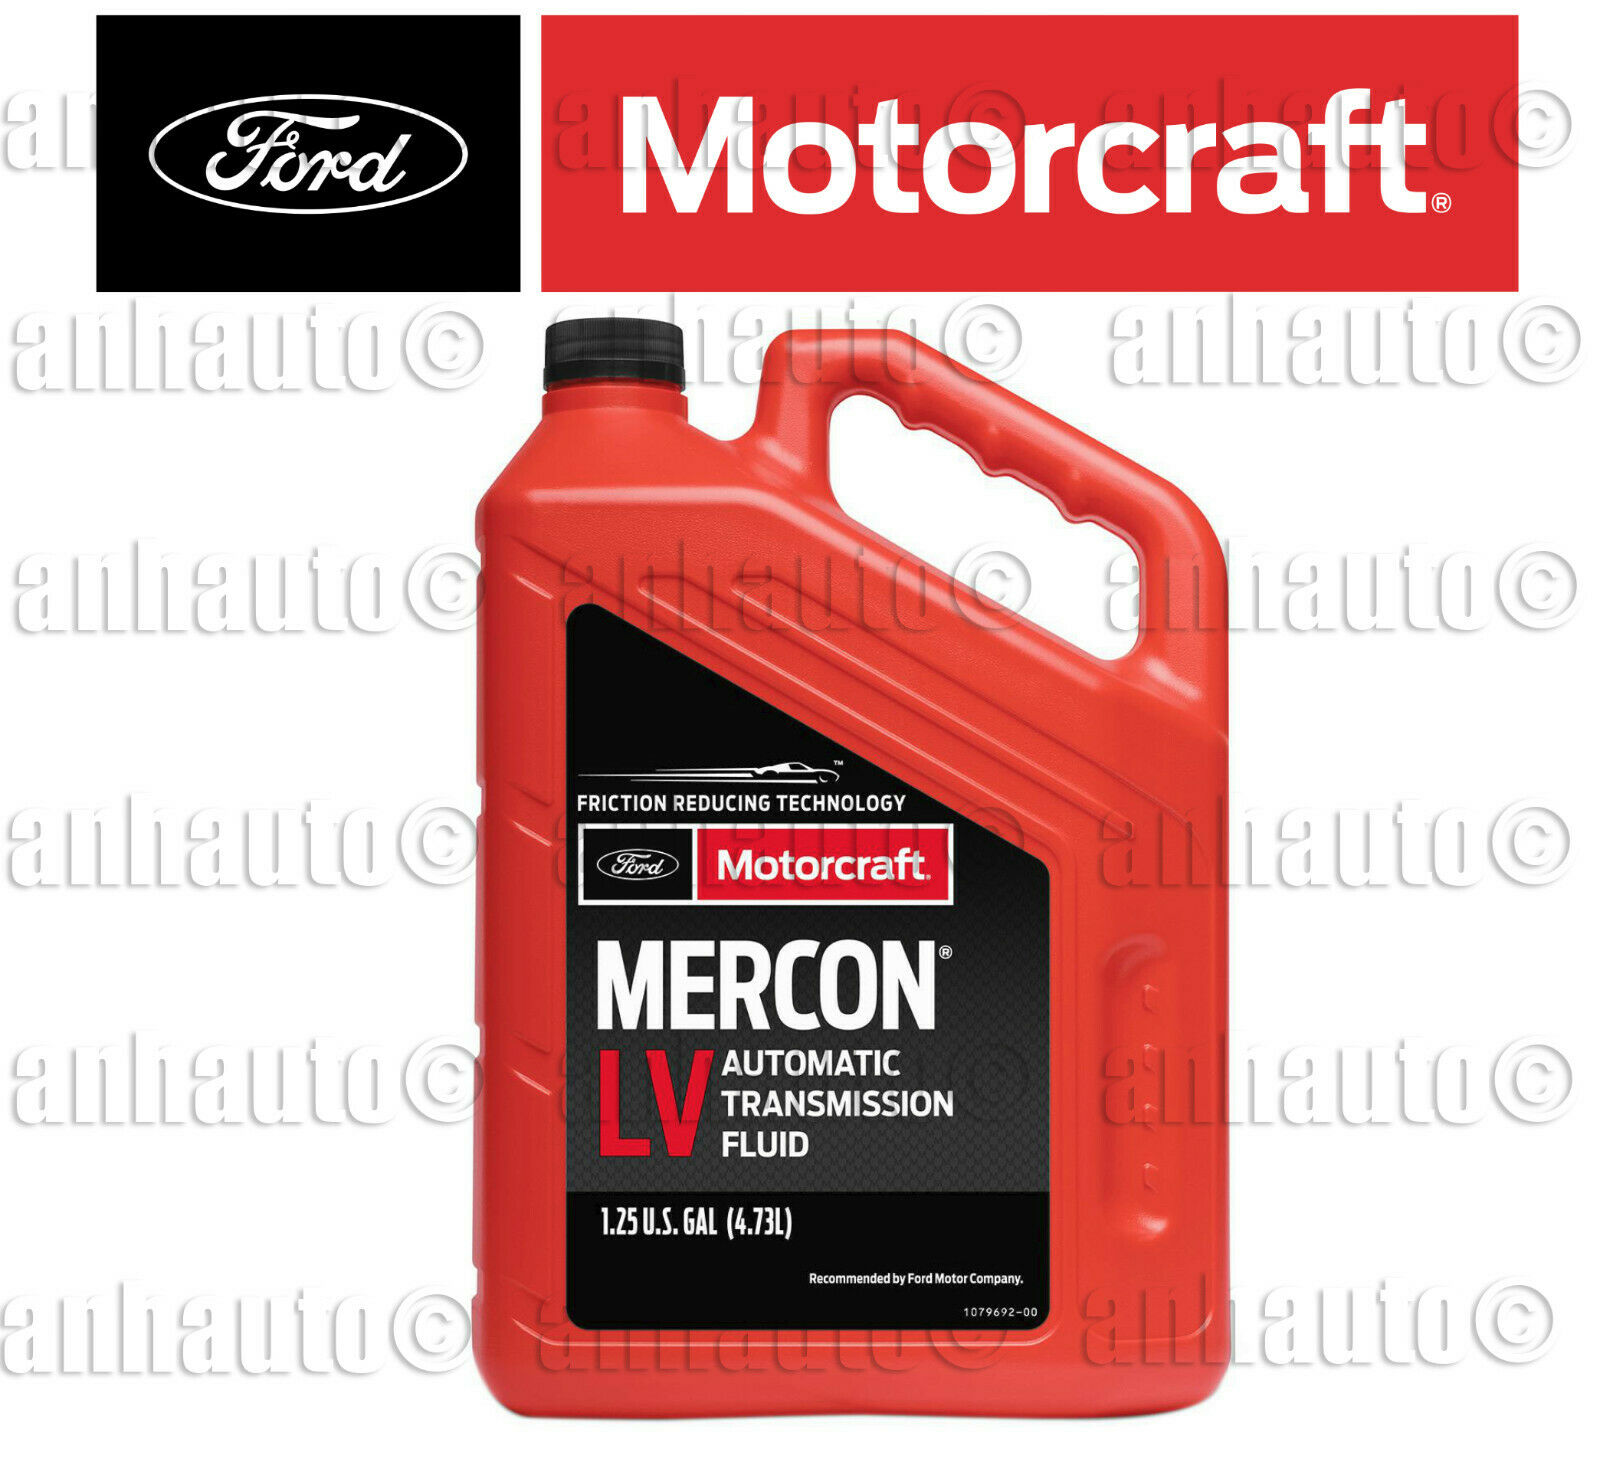 5-quarts Motorcraft  Mercon Lv Automatic Transmission Fluid (1.25 Gallon)